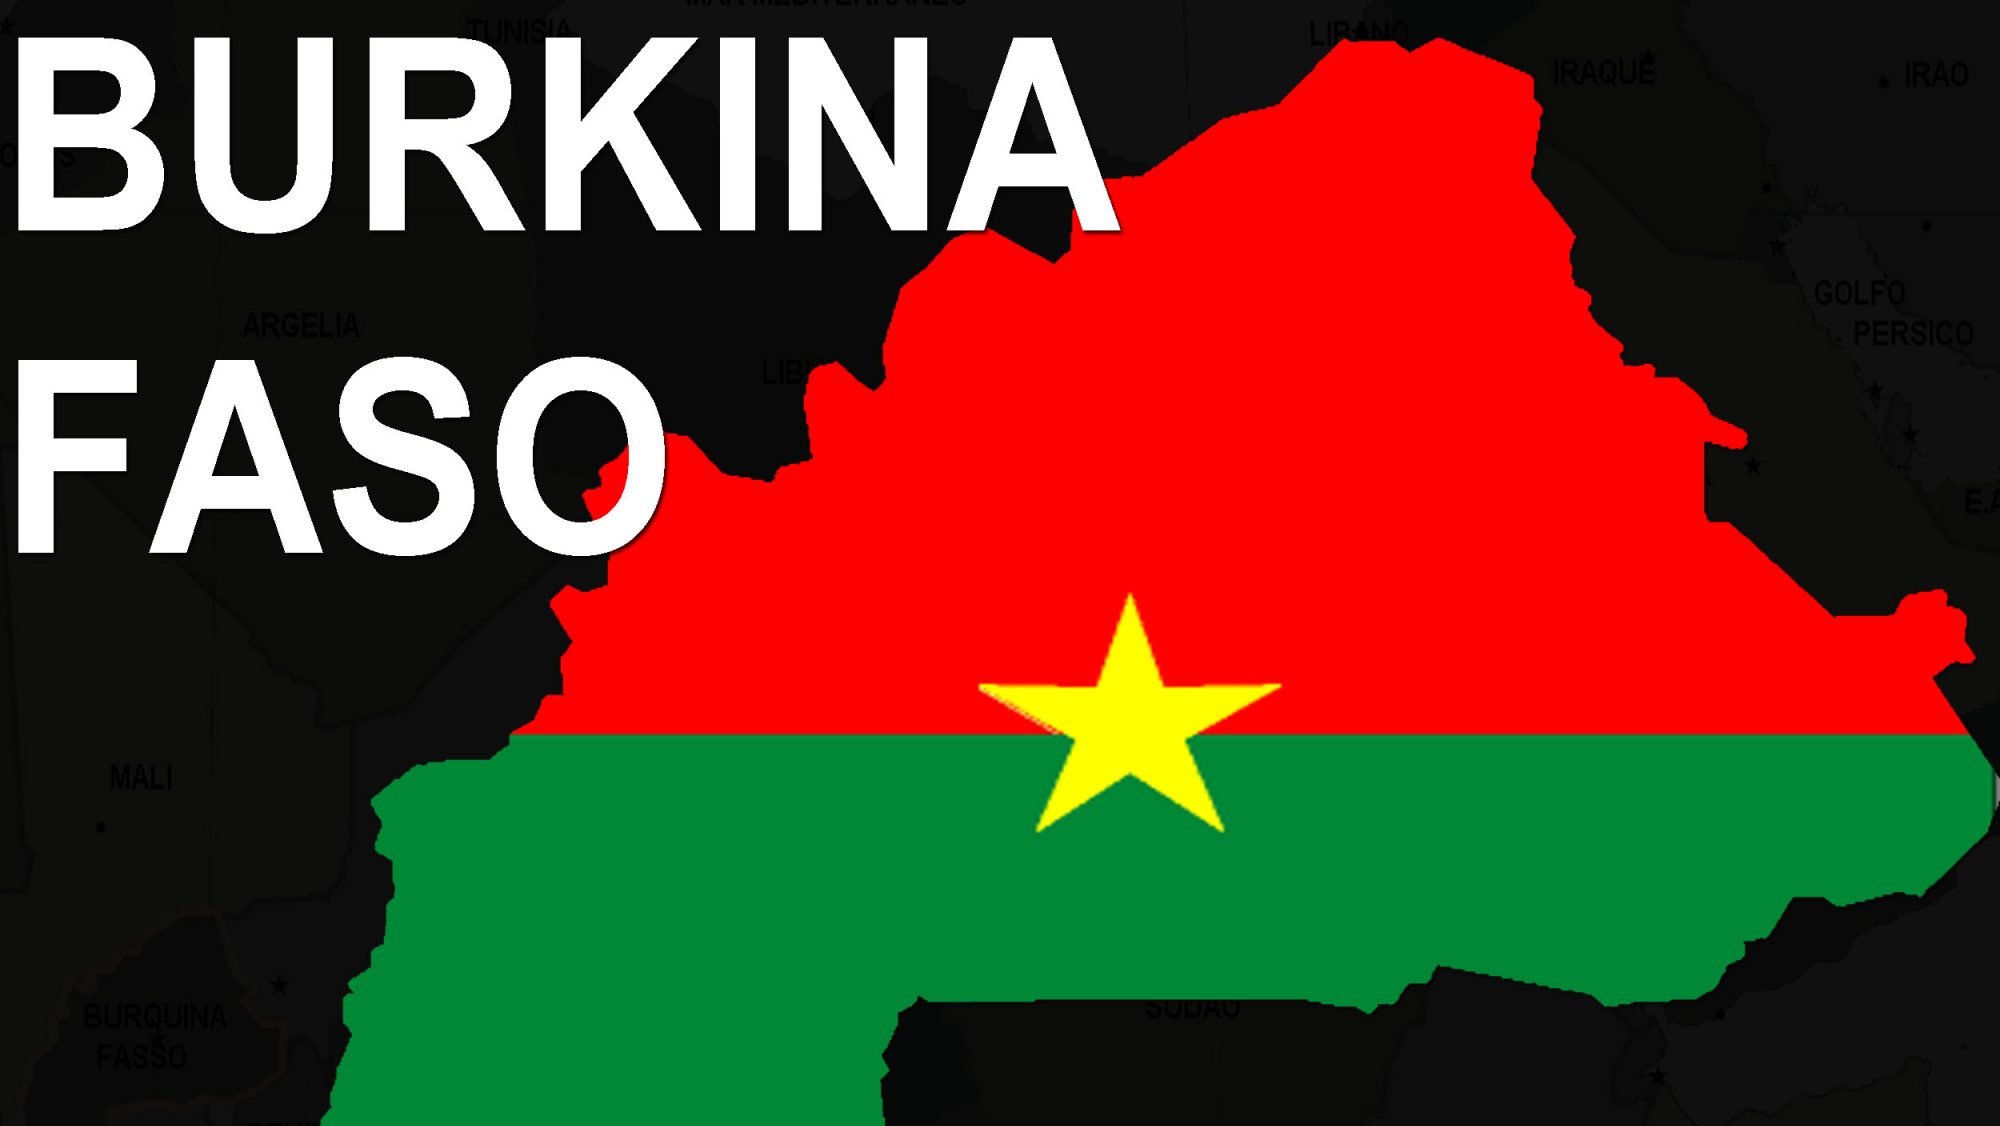 O Burkina Faso é alvo do flagelo do jihadismo desde abril de 2015